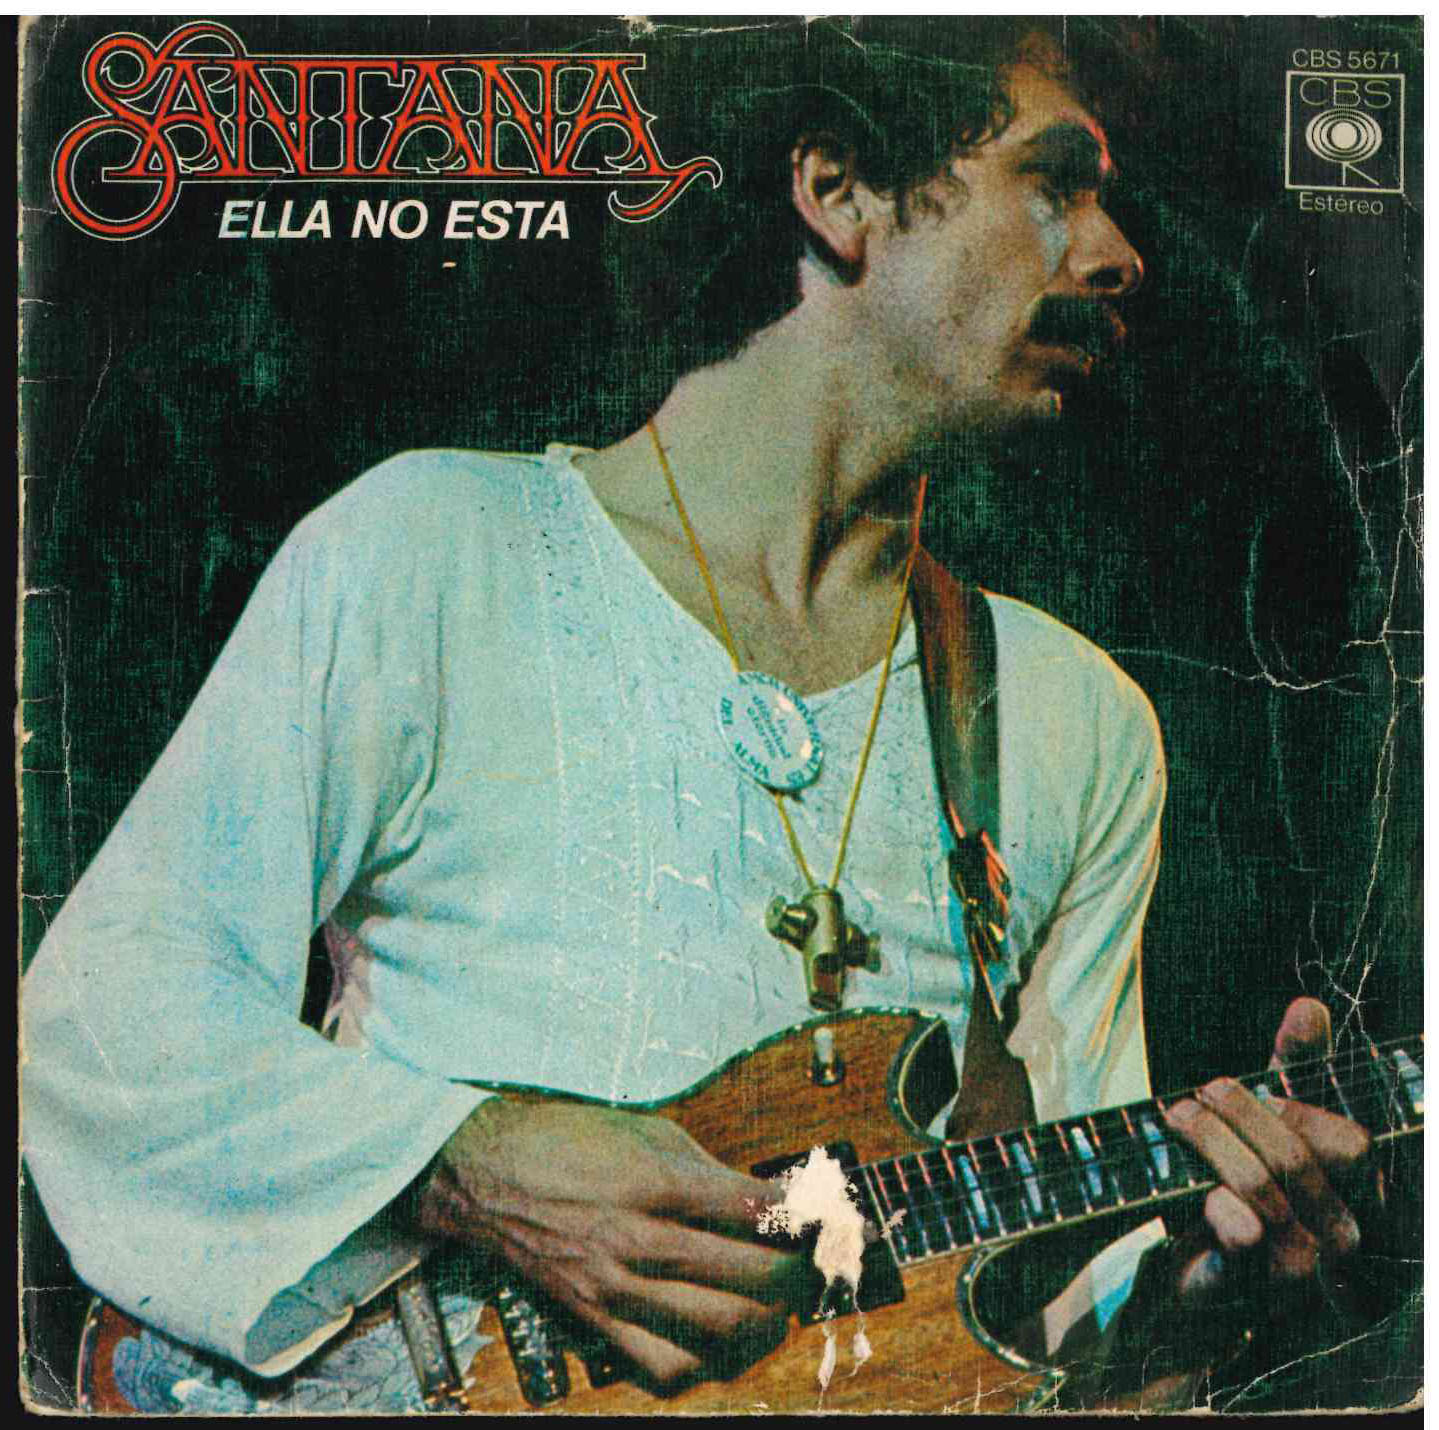 Santana. Ella no está / Zulú. CBS 1977 (CBS 5671). Single 45 RPM